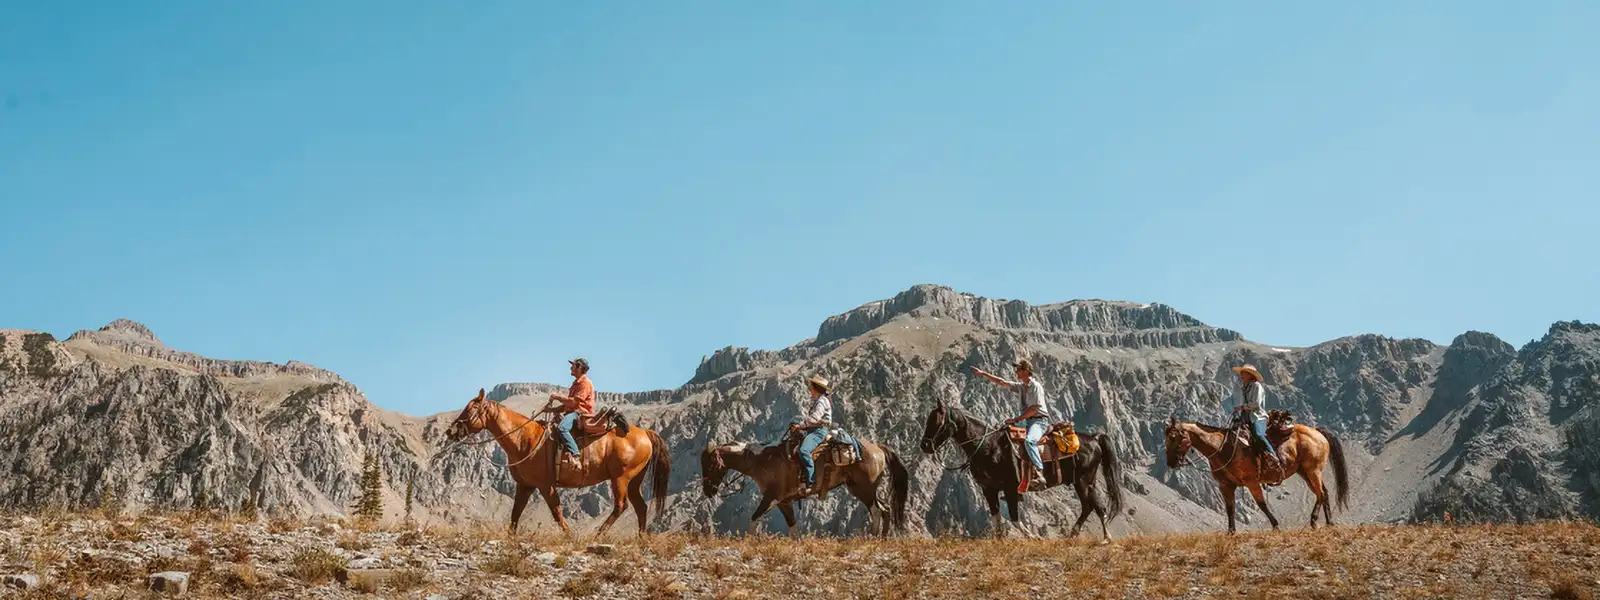 Four people riding on horseback in the Bridger-Teton National Forest.